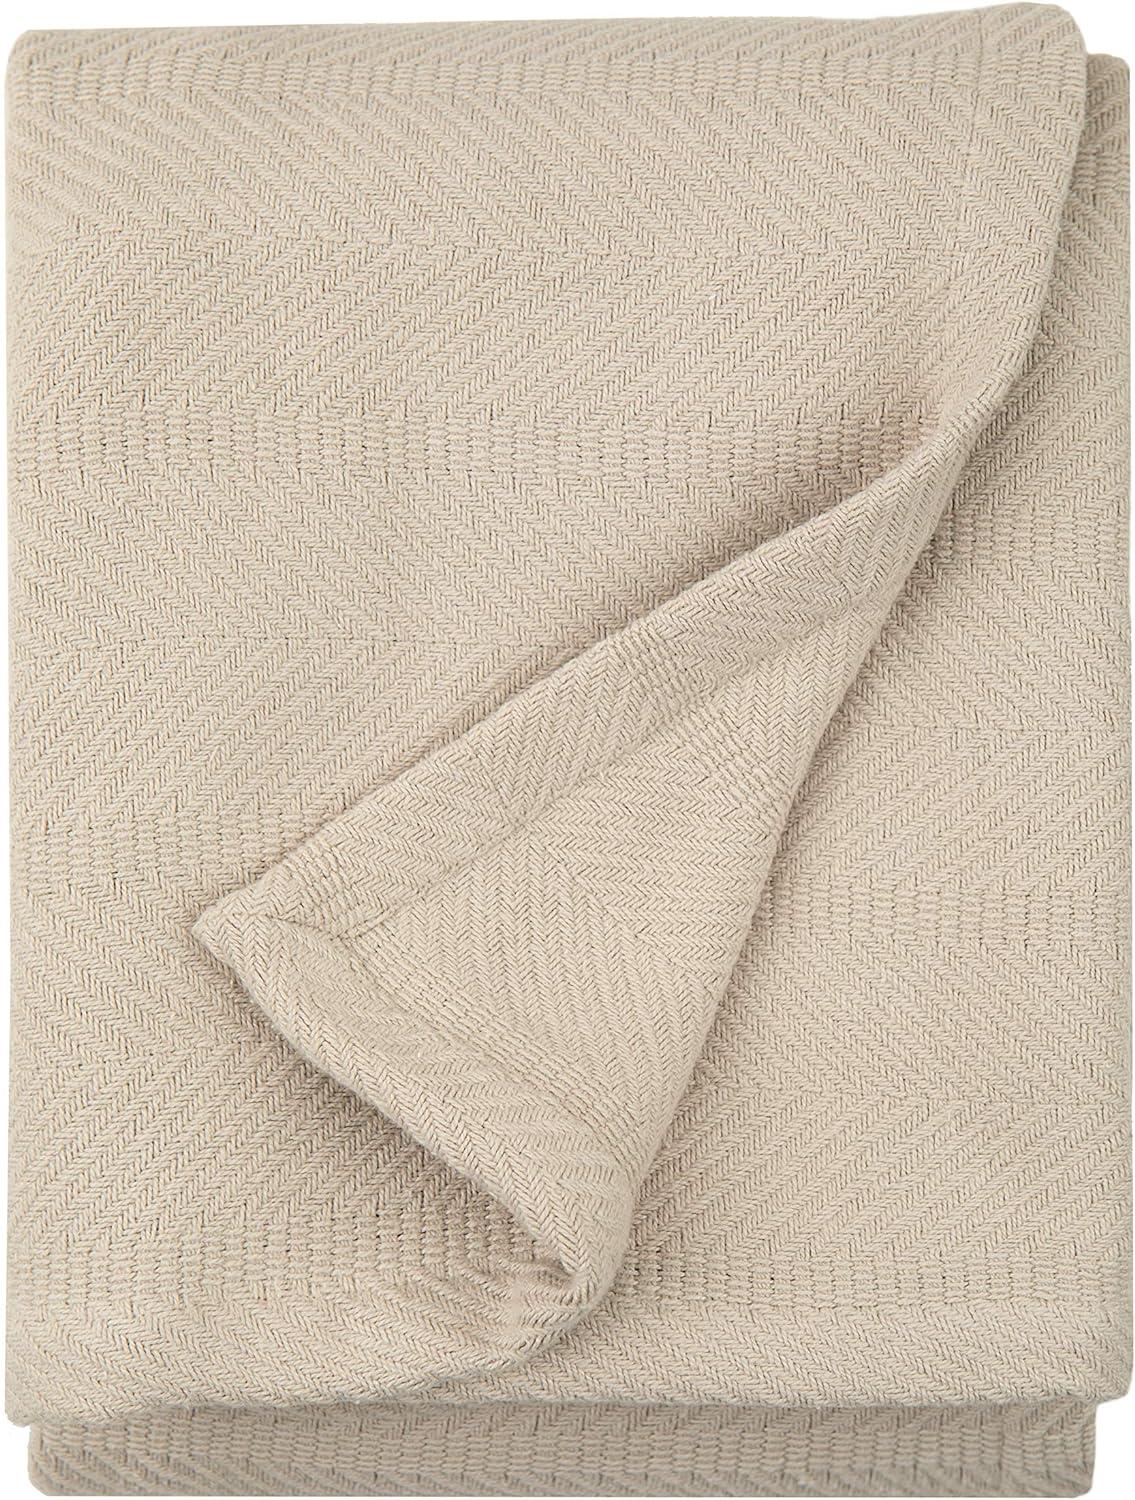 Classic Tan Herringbone Cotton Throw Blanket, 60" x 50"